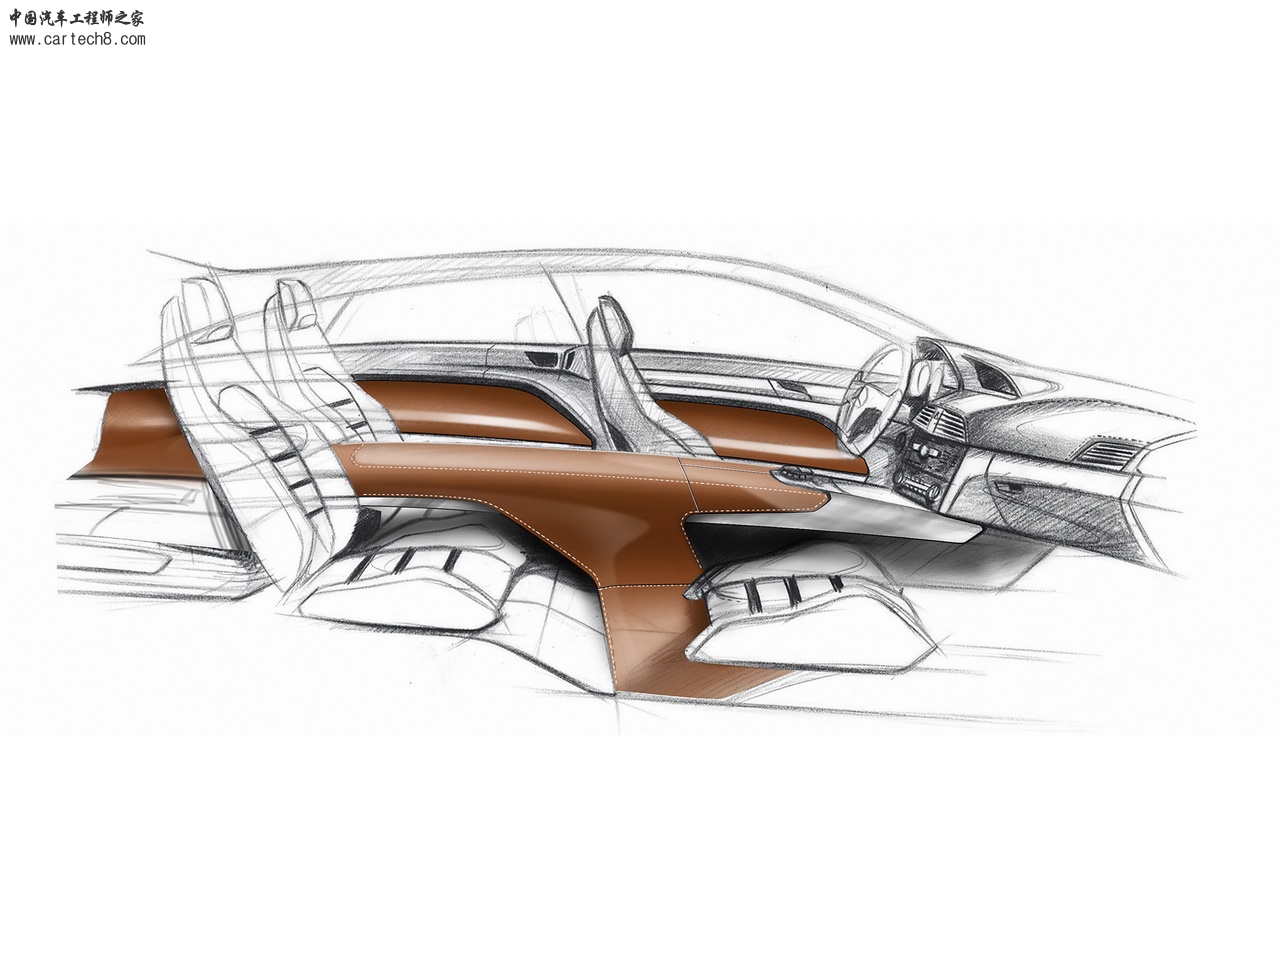 2008-Mercedes-Benz-ConceptFASCINATION-Drawing-Interior-1280x960.jpg